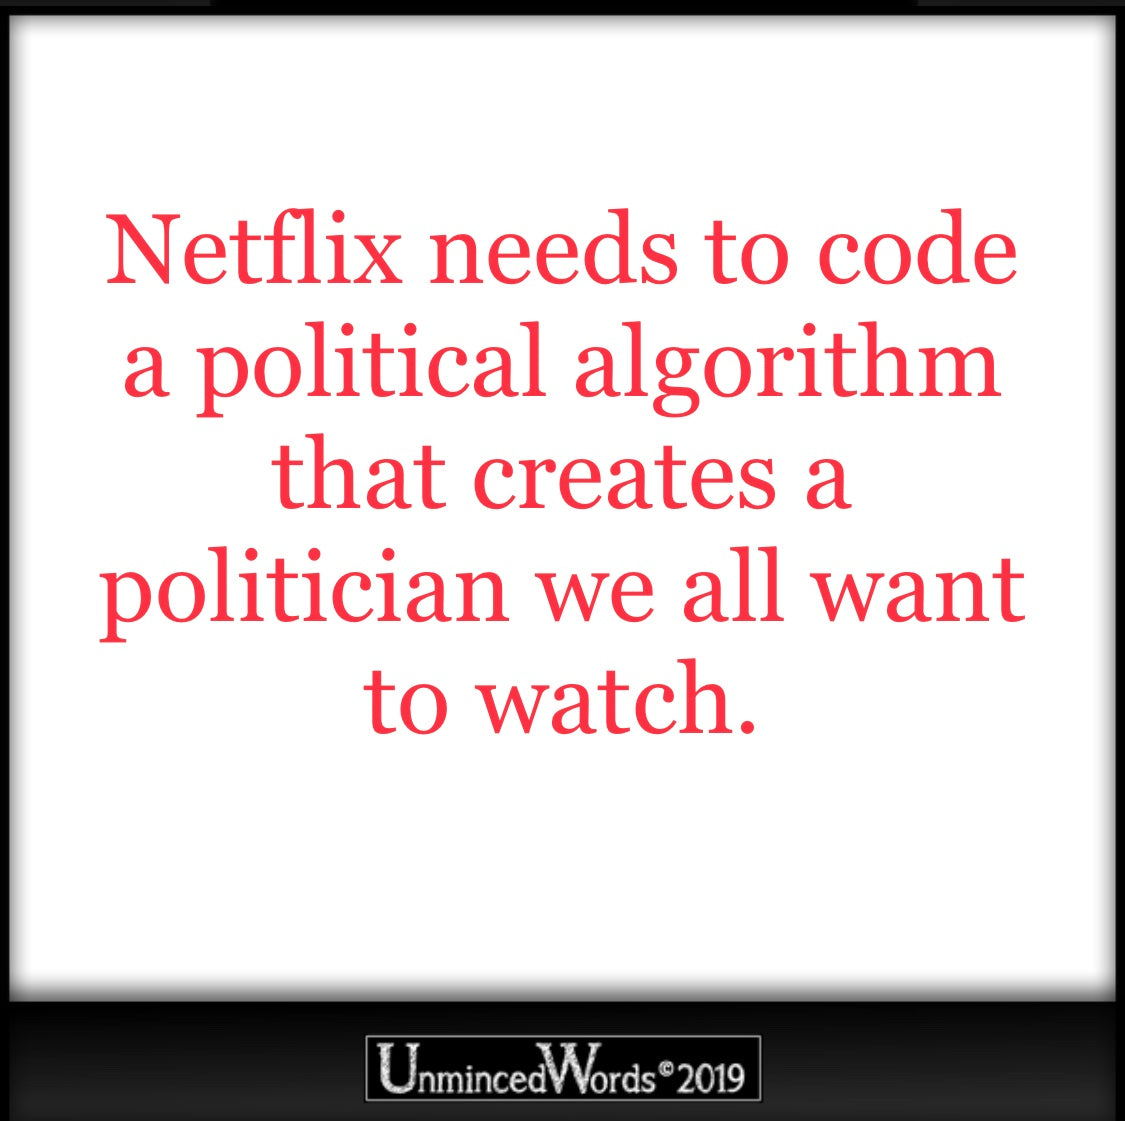 Netflix needs to code a Political algorithm...